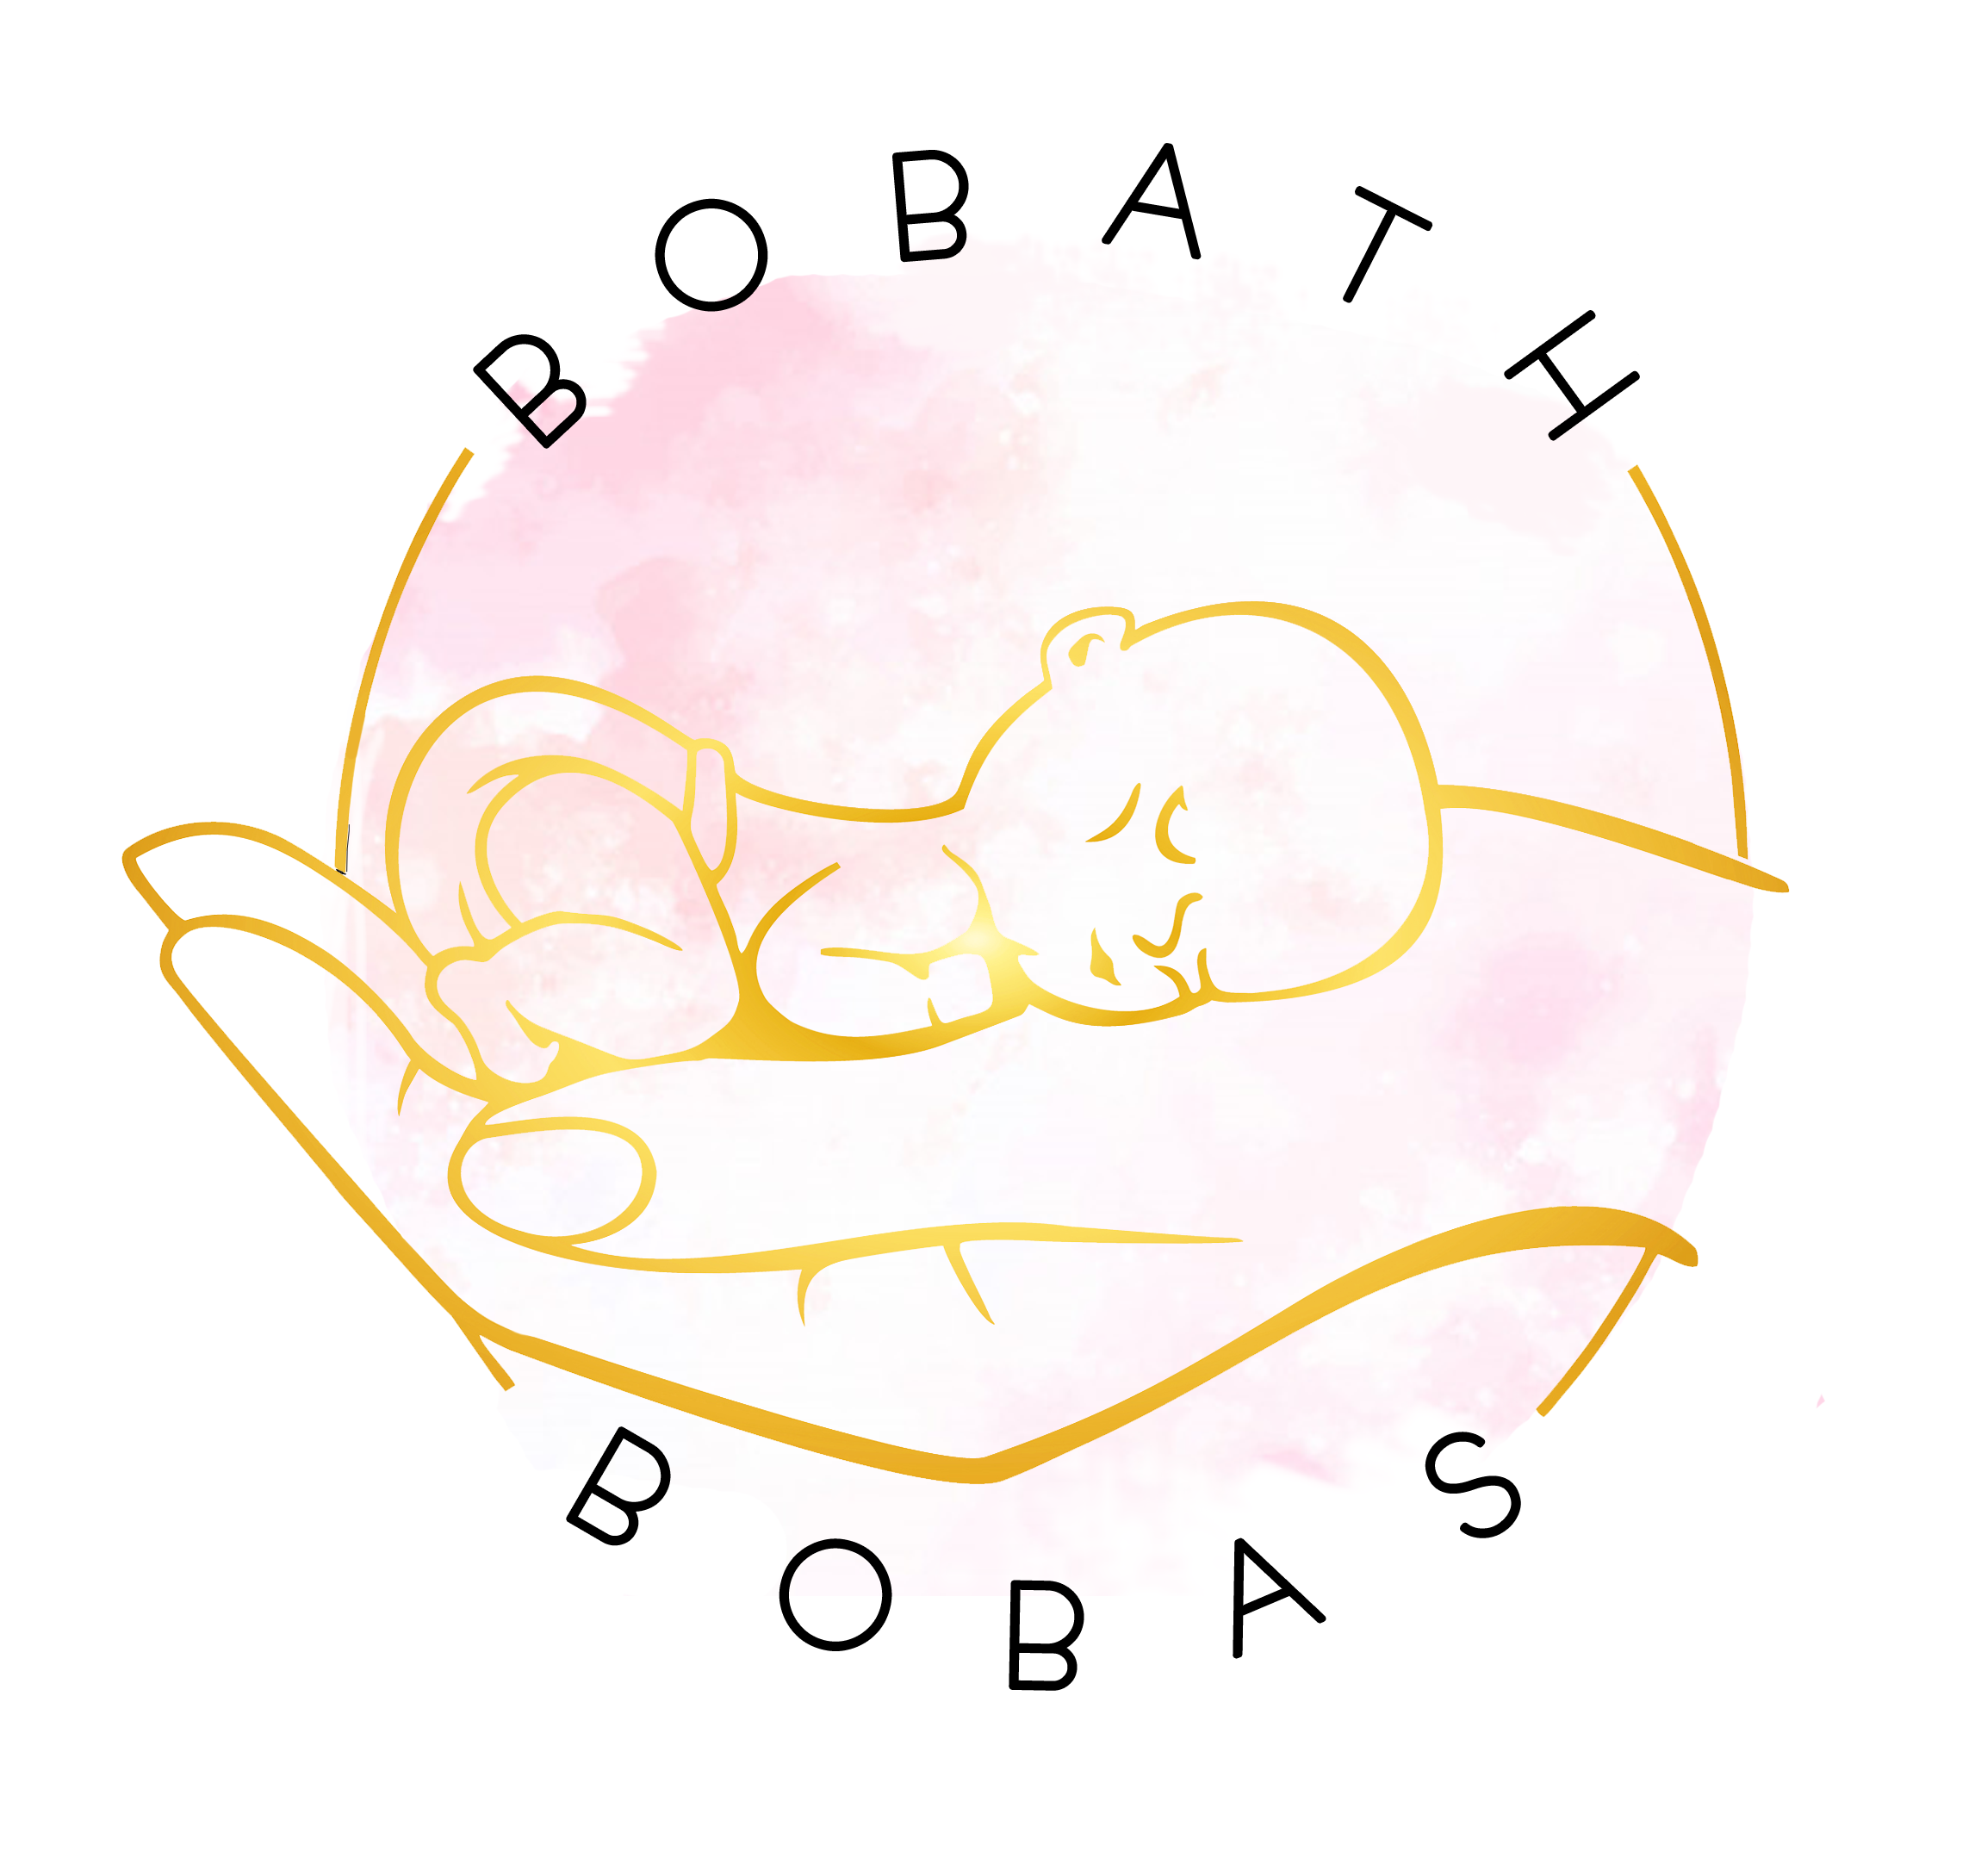 Bobath Bobas